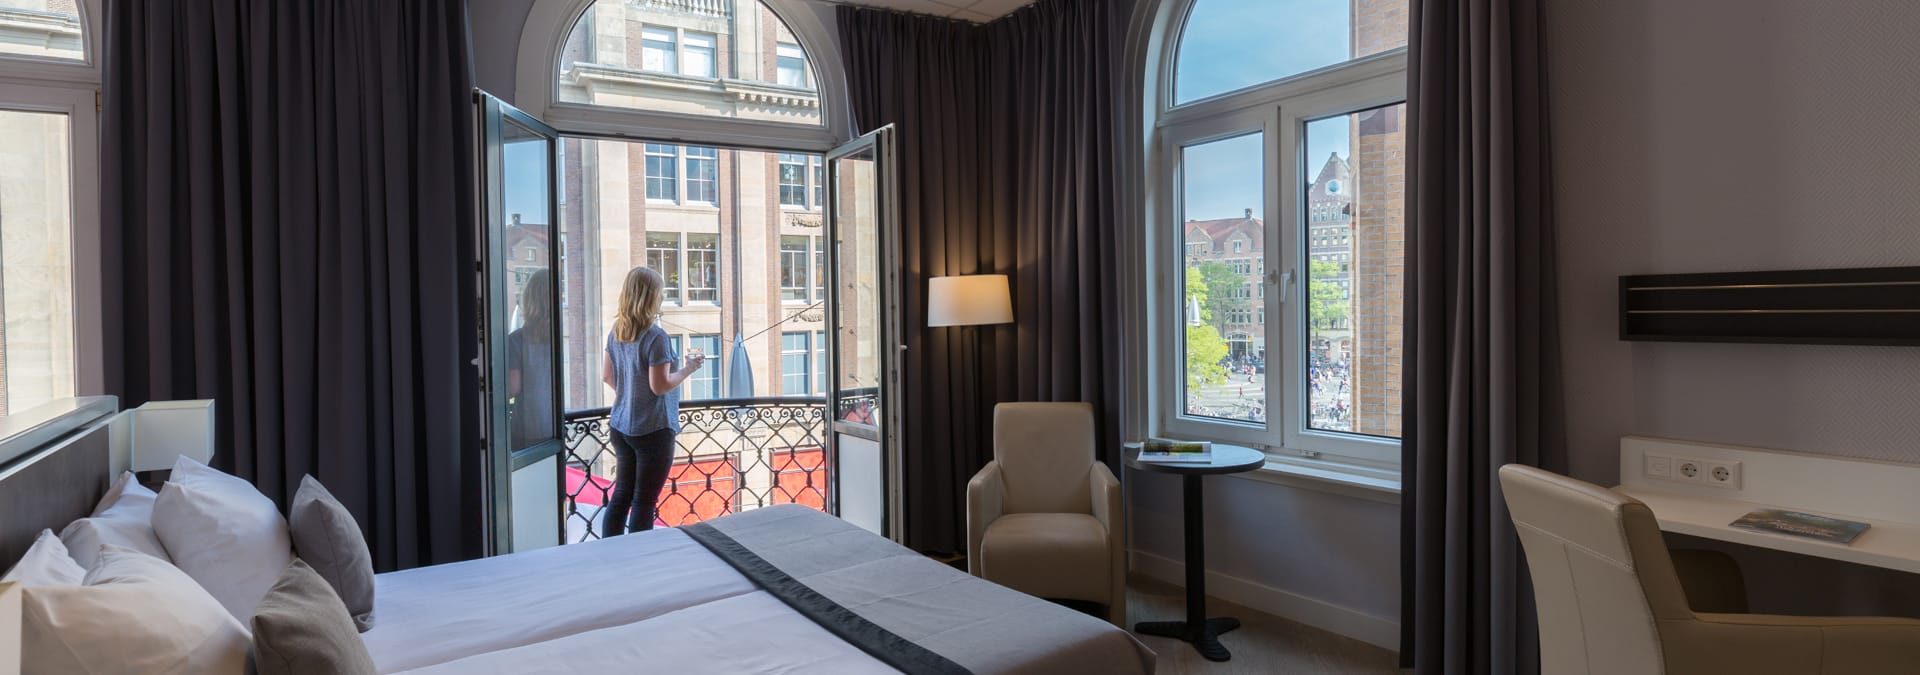 Hotel Amsterdam De Roode leeuw Cover Picture